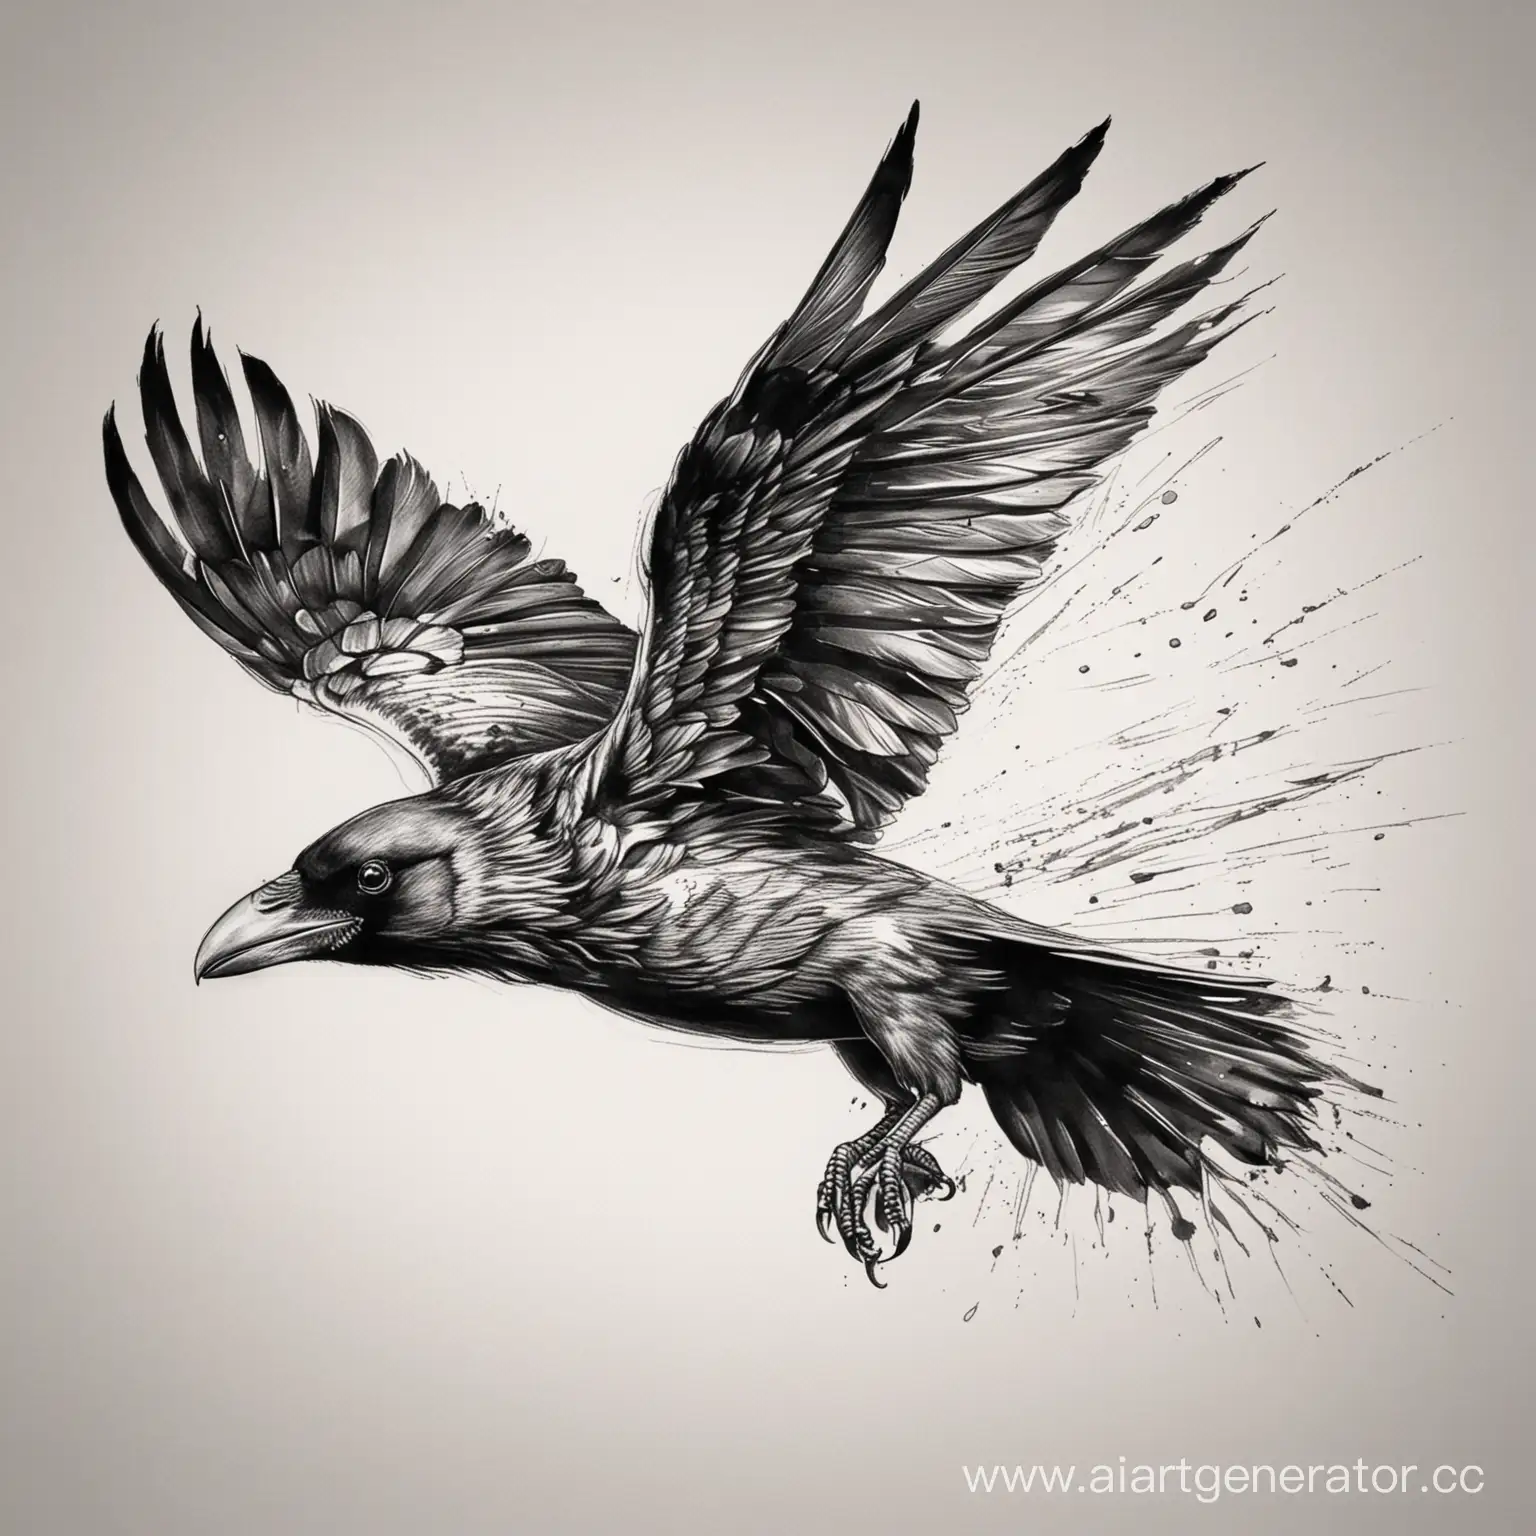 Majestic-Flying-Crow-Tattoo-Sketch-in-Monochrome